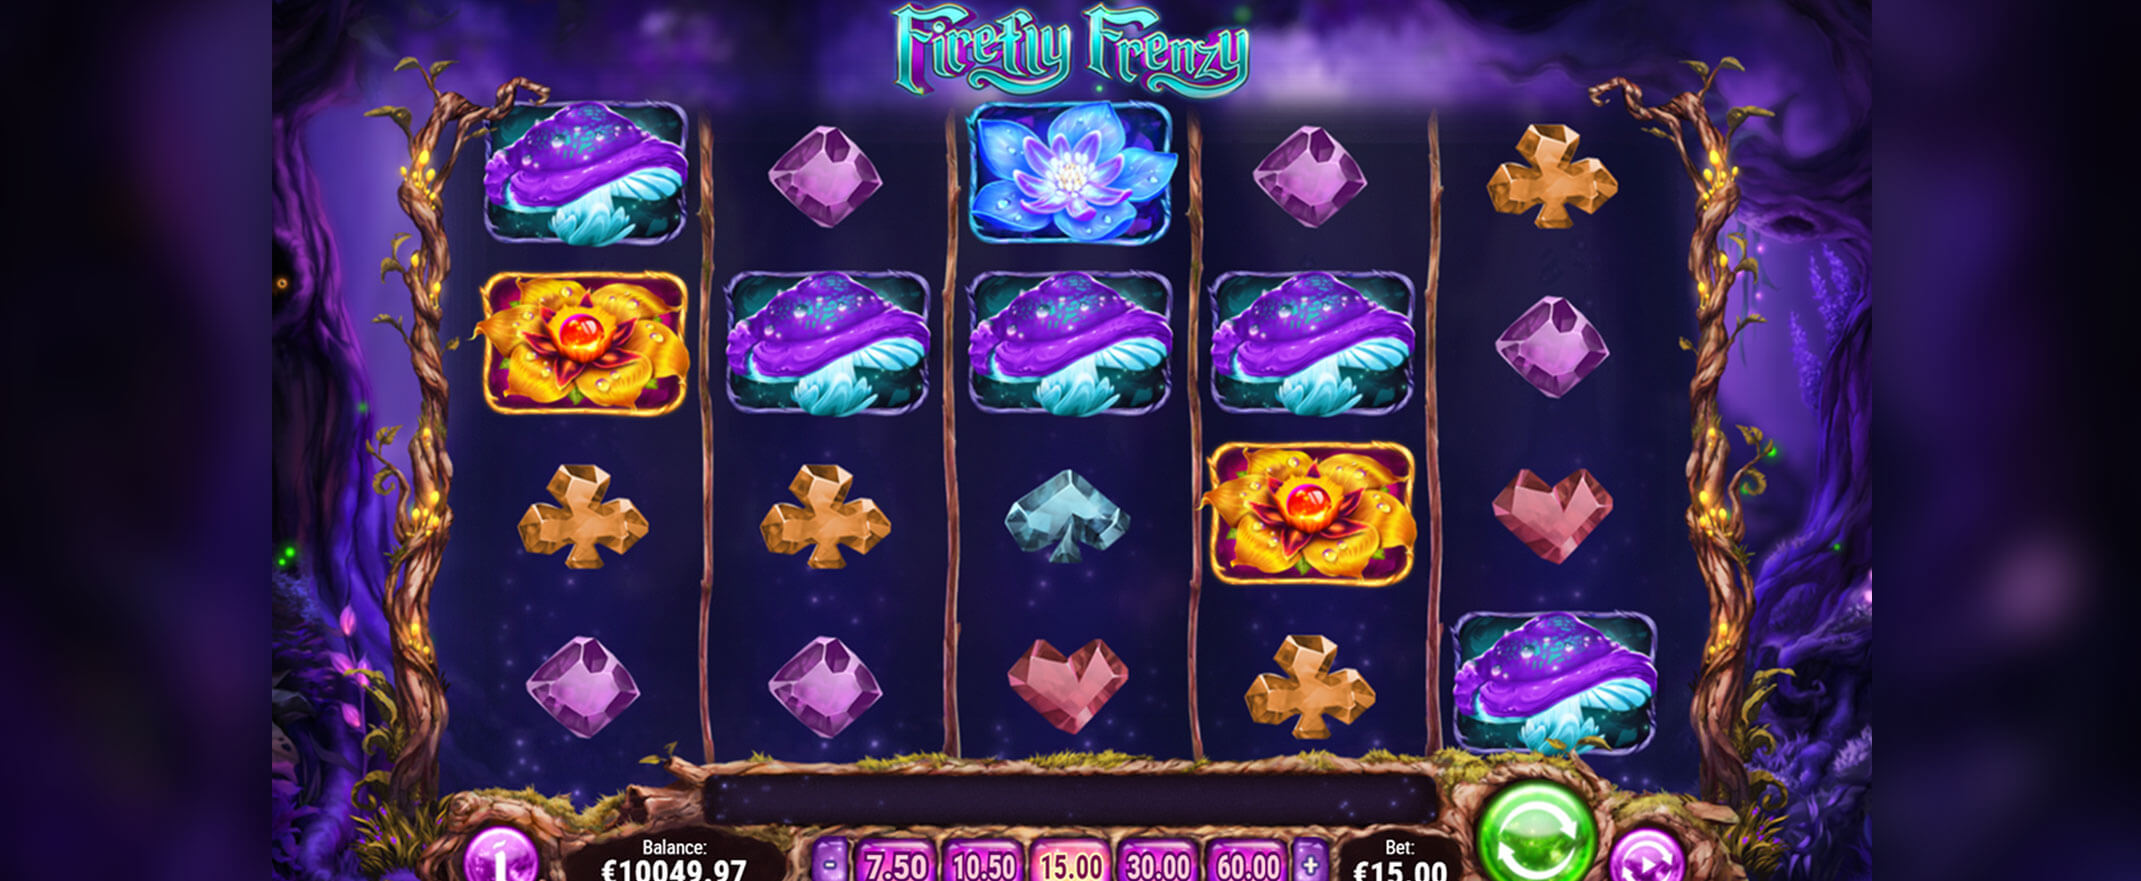 Firefly Frenzy Spielautomat von Play'n Go